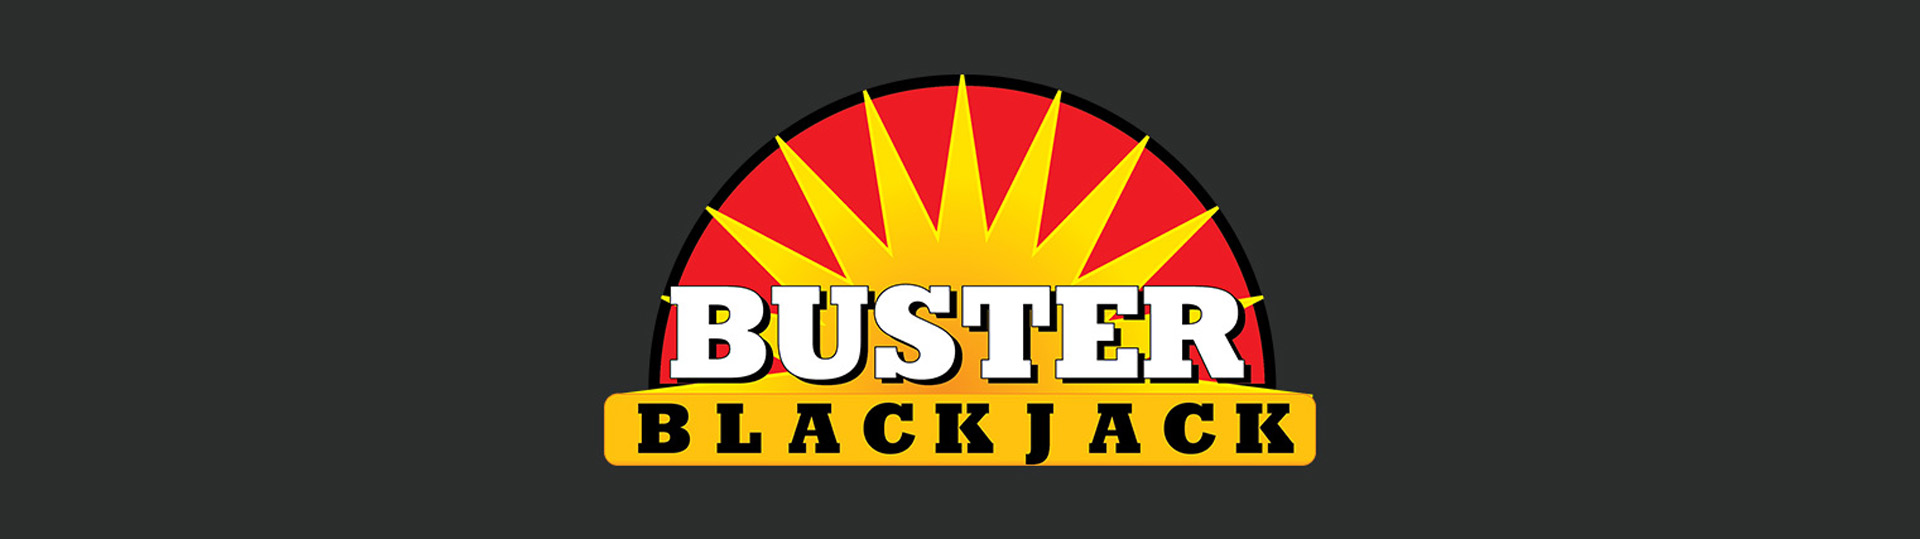 Buster Blackjack: Playtech game